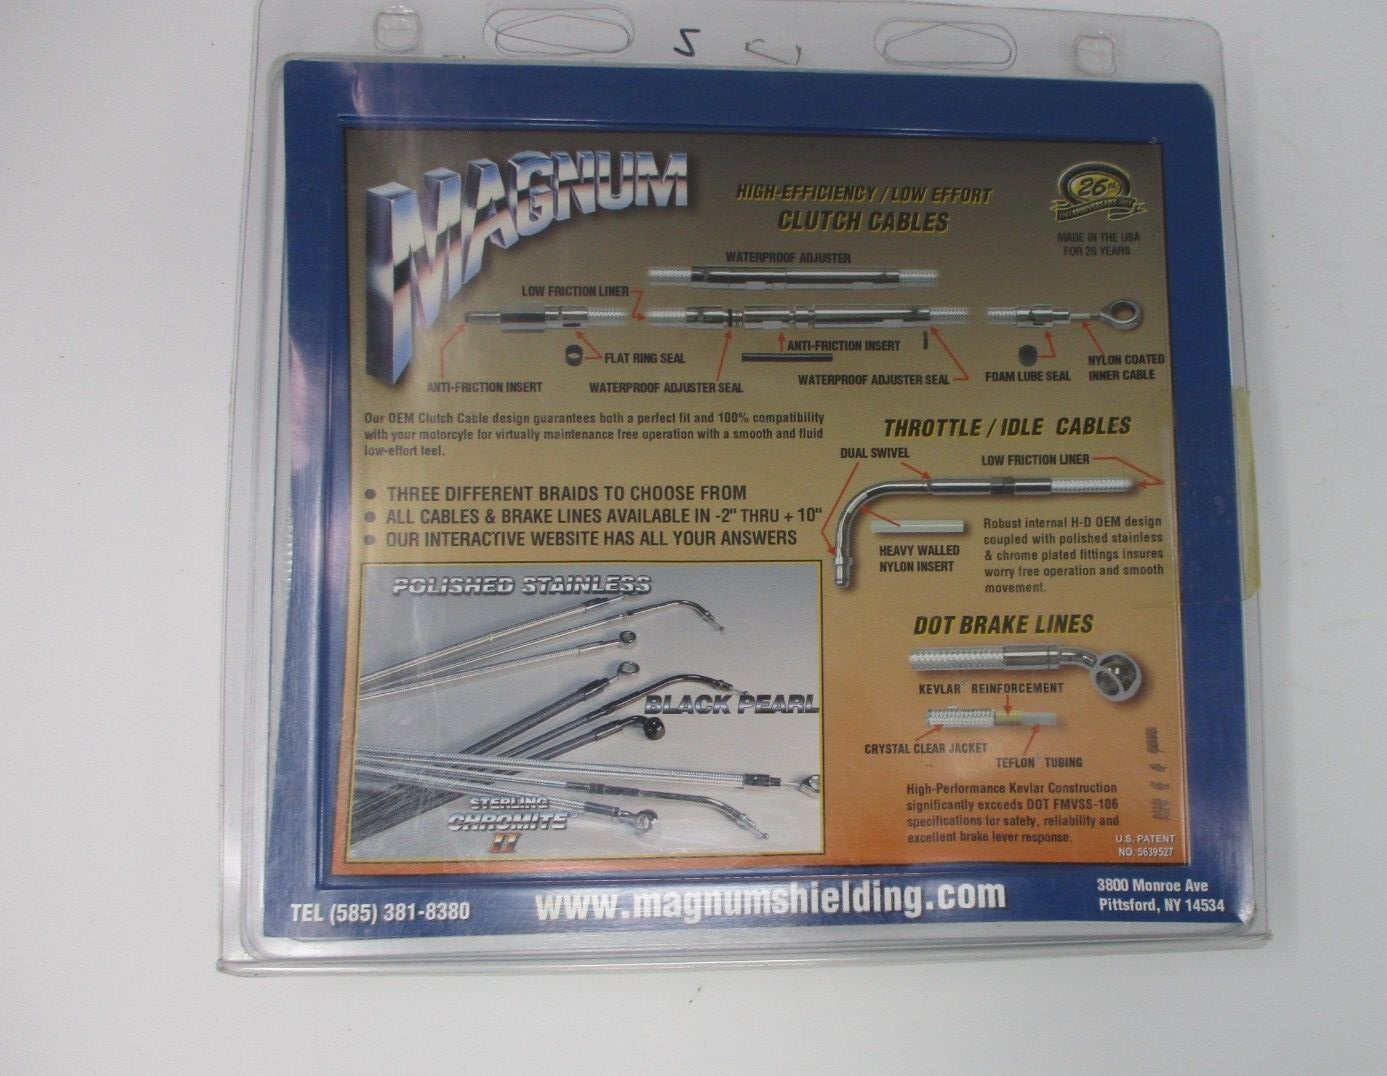 Magnum CHROMITE II IDLE CABLE +6" 173032